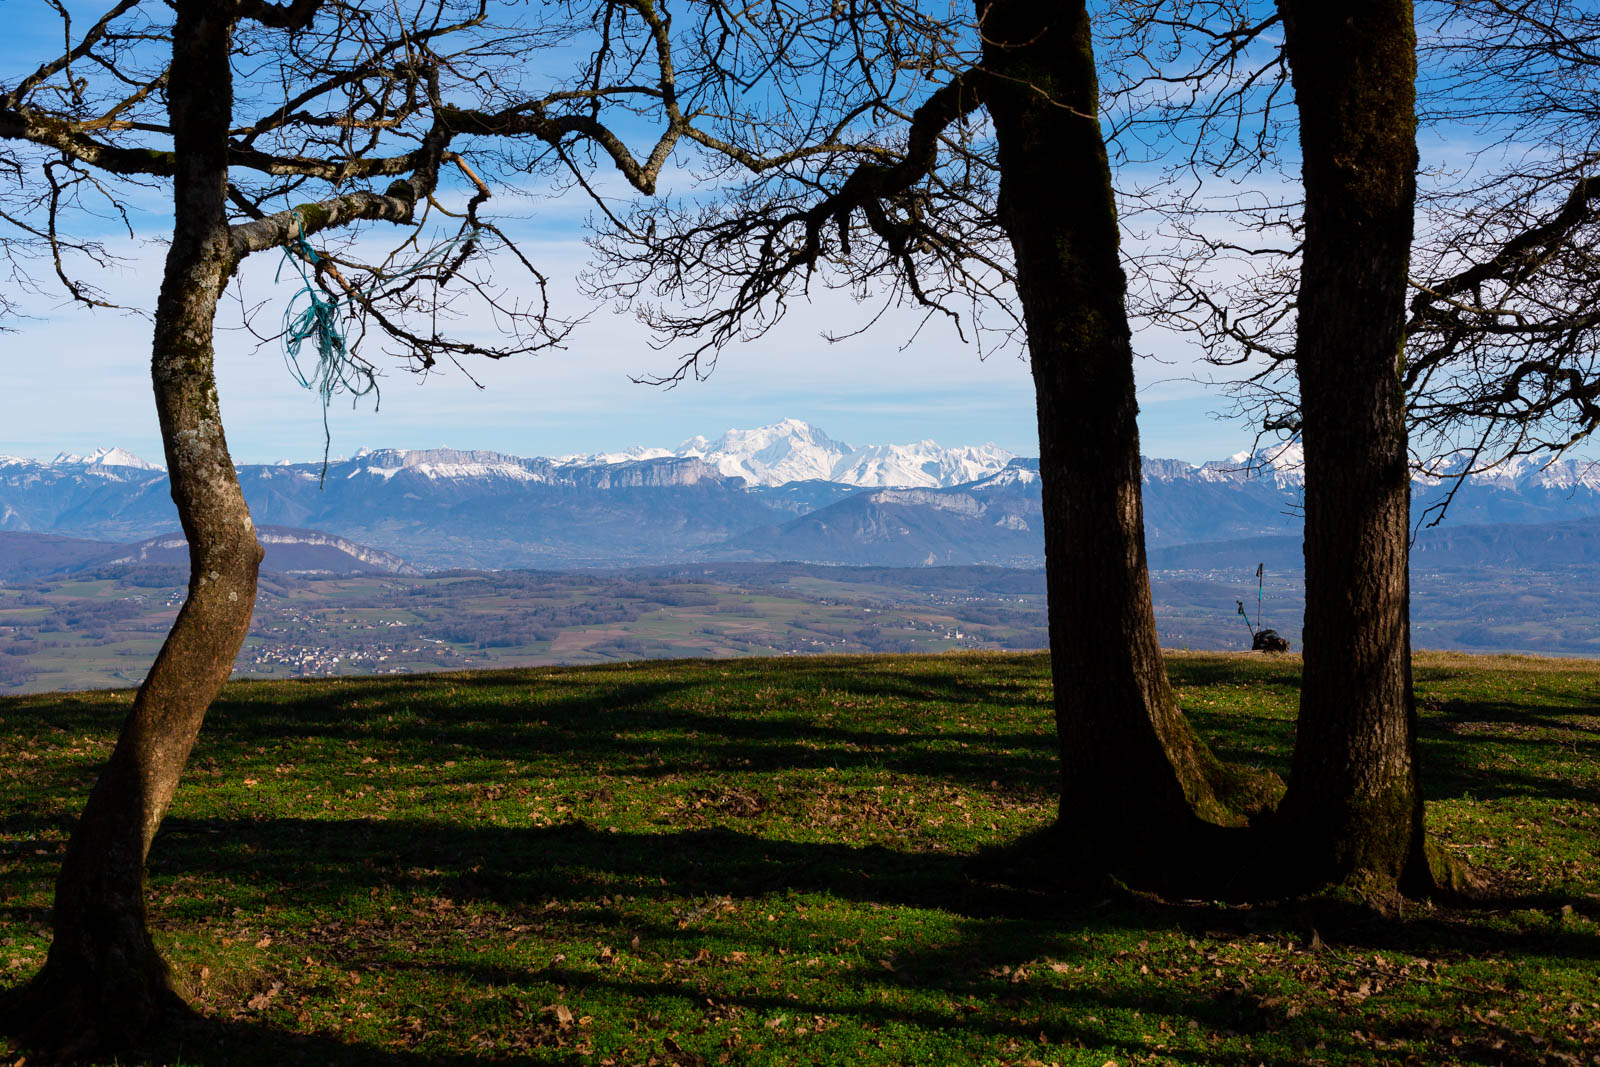 Le Mont-Blanc à travers les arbres - Canon EOS 5D Mark III - EF 50 mm f/1,4 USM - ISO 100 - f/11 - 1/320 s